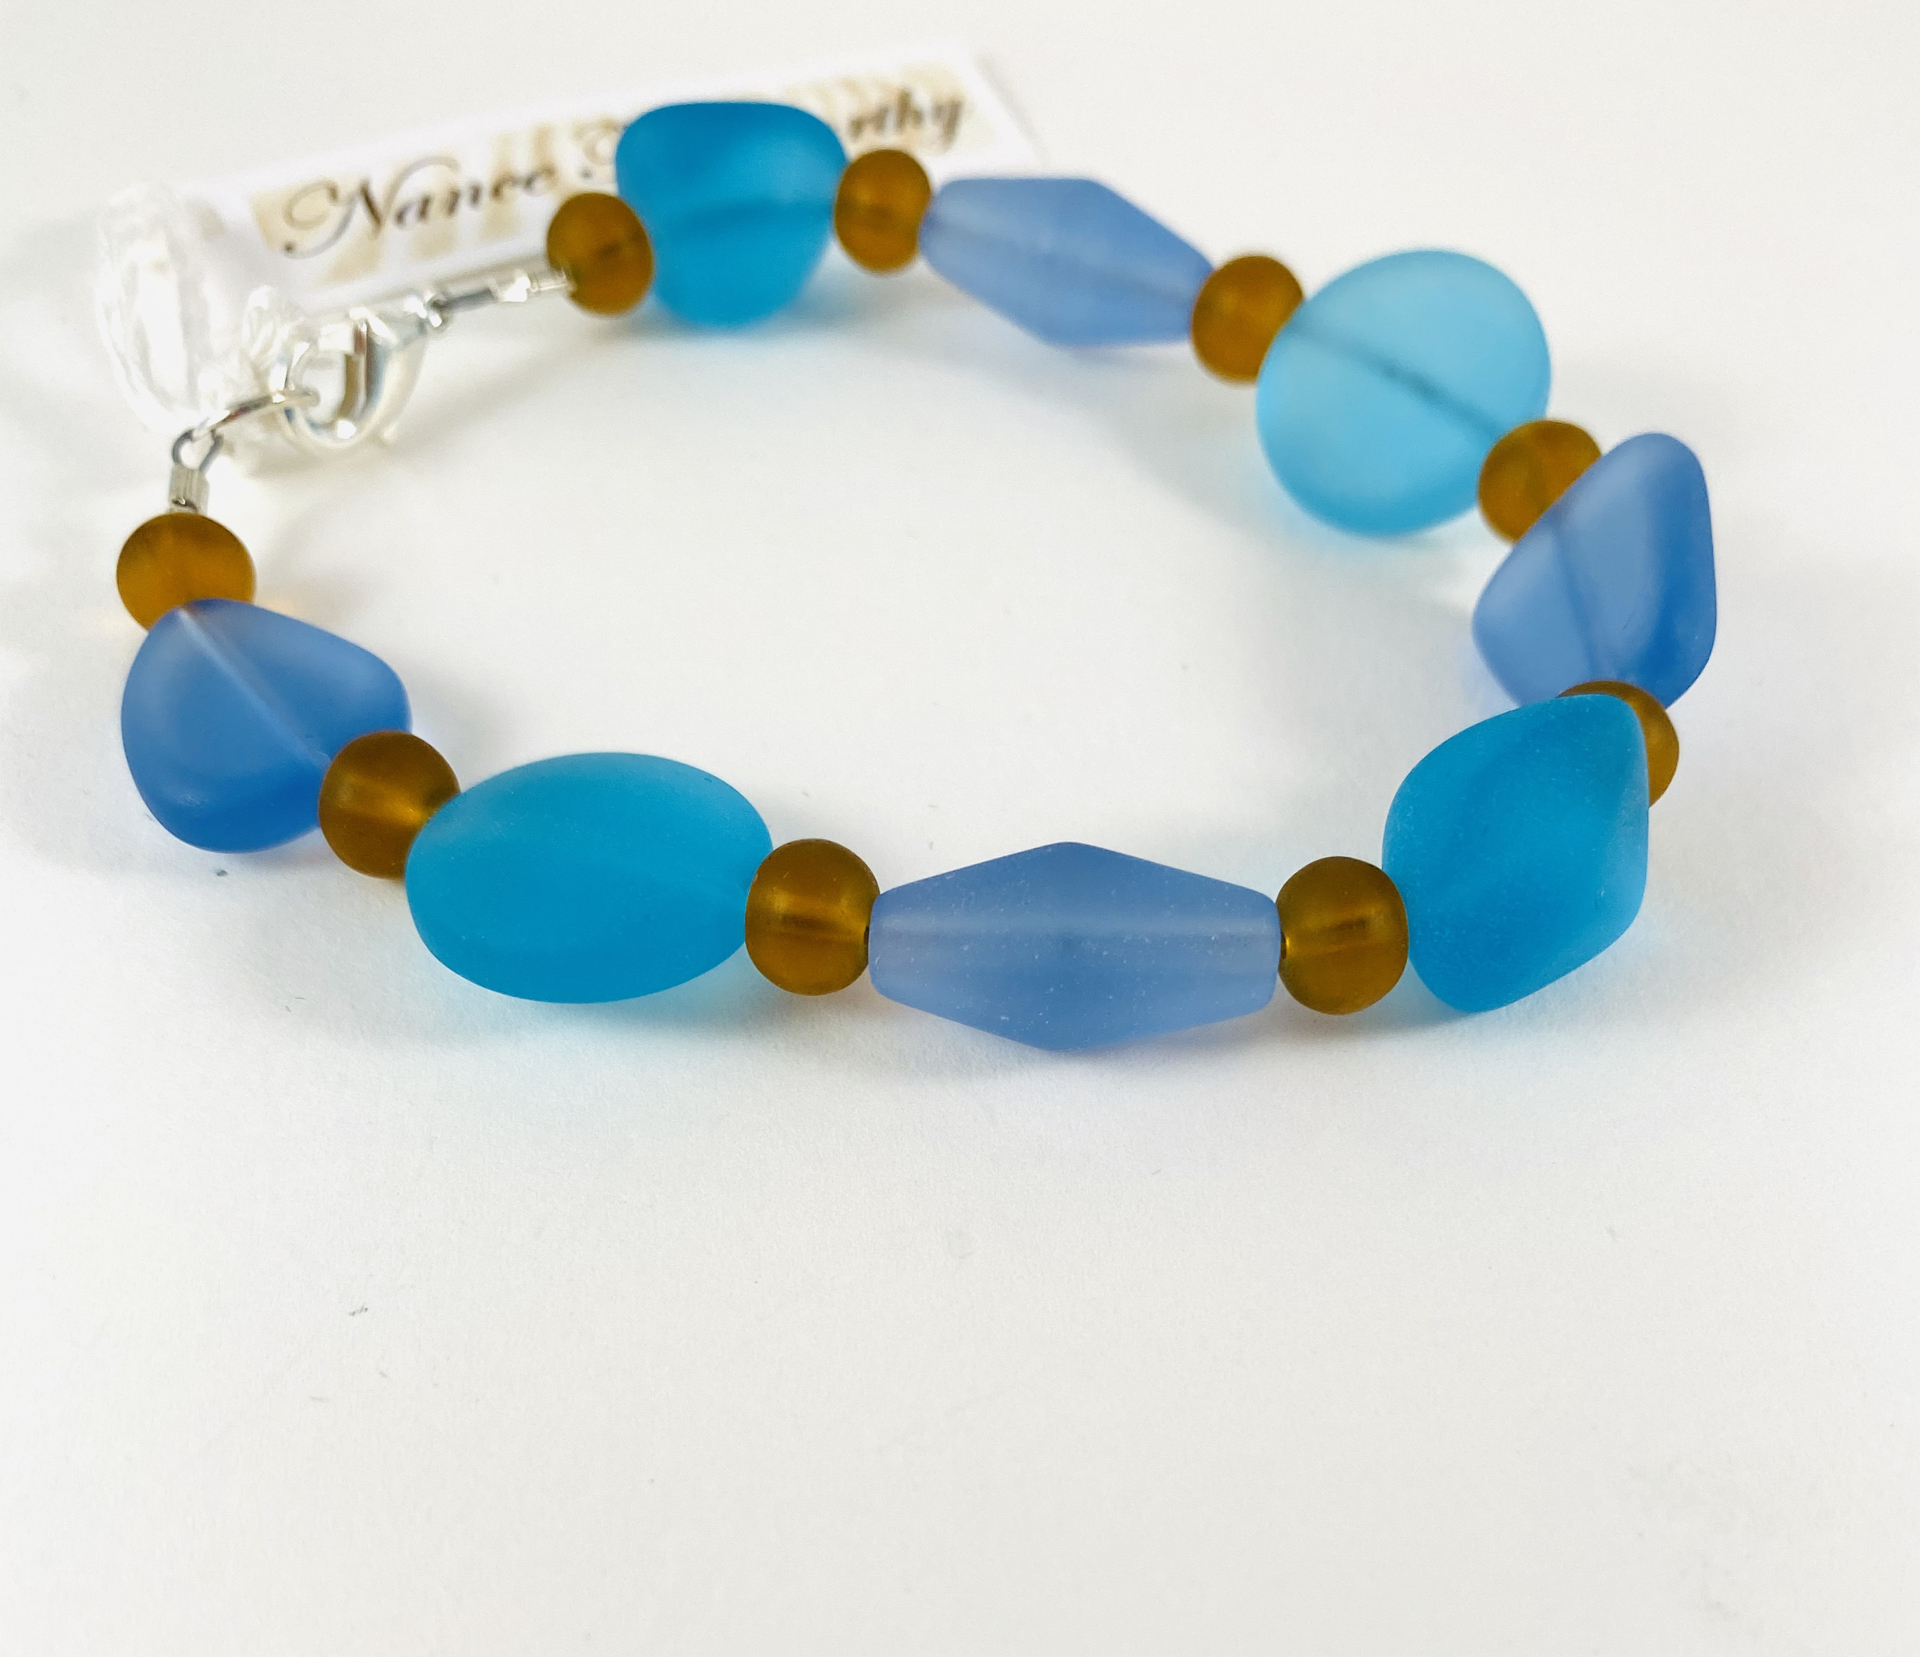 Cultured Seaglass Bracelet #5 by Nance Trueworthy